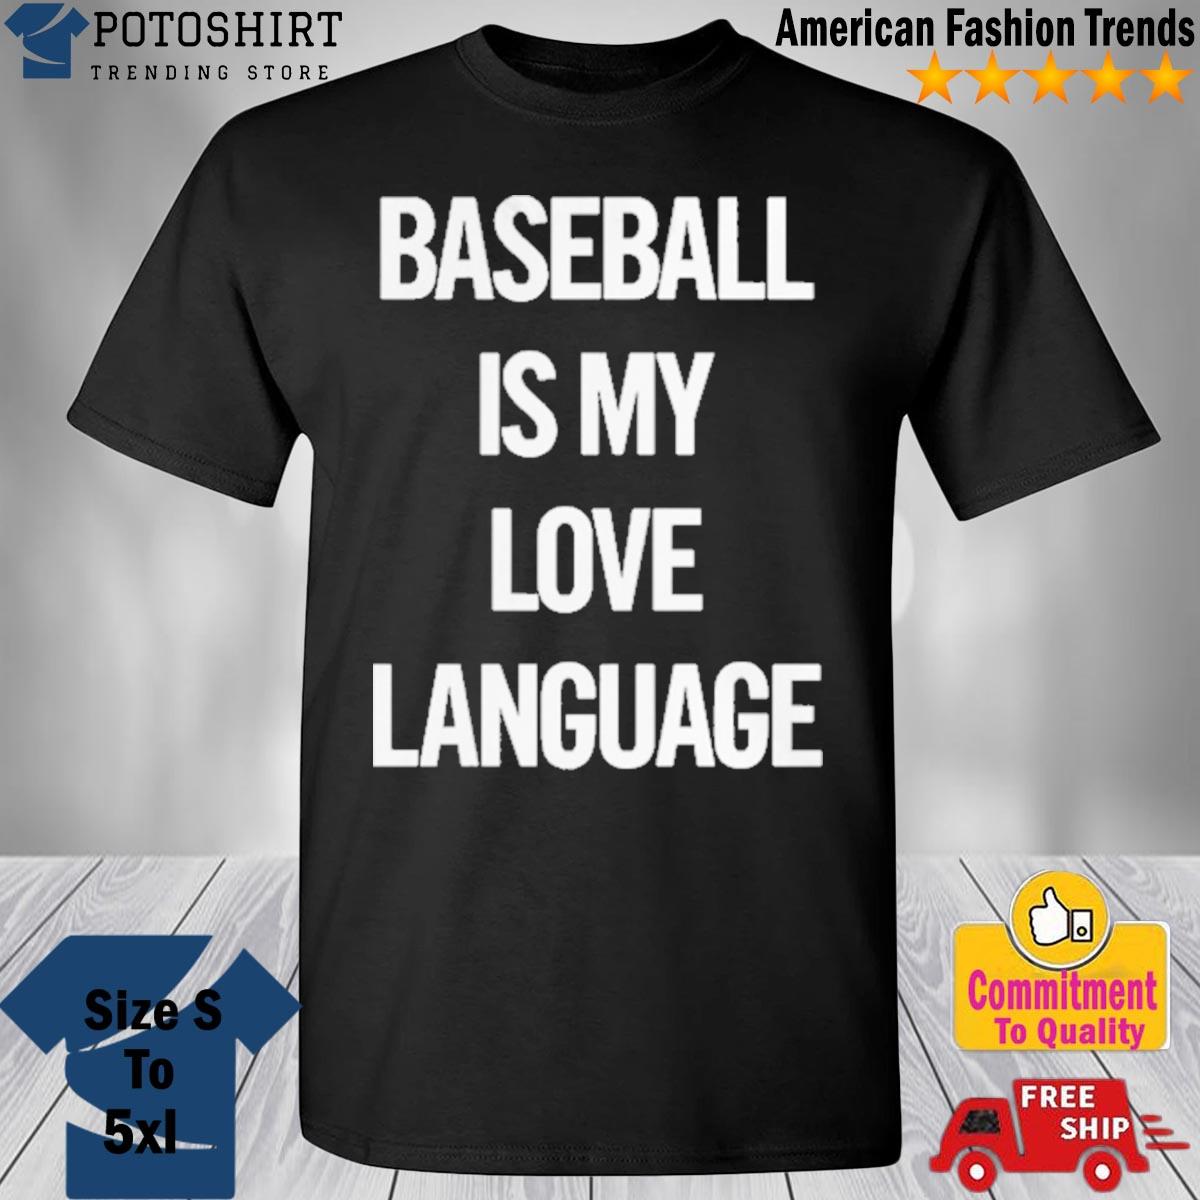 Aim doll baseball is my love language shirt